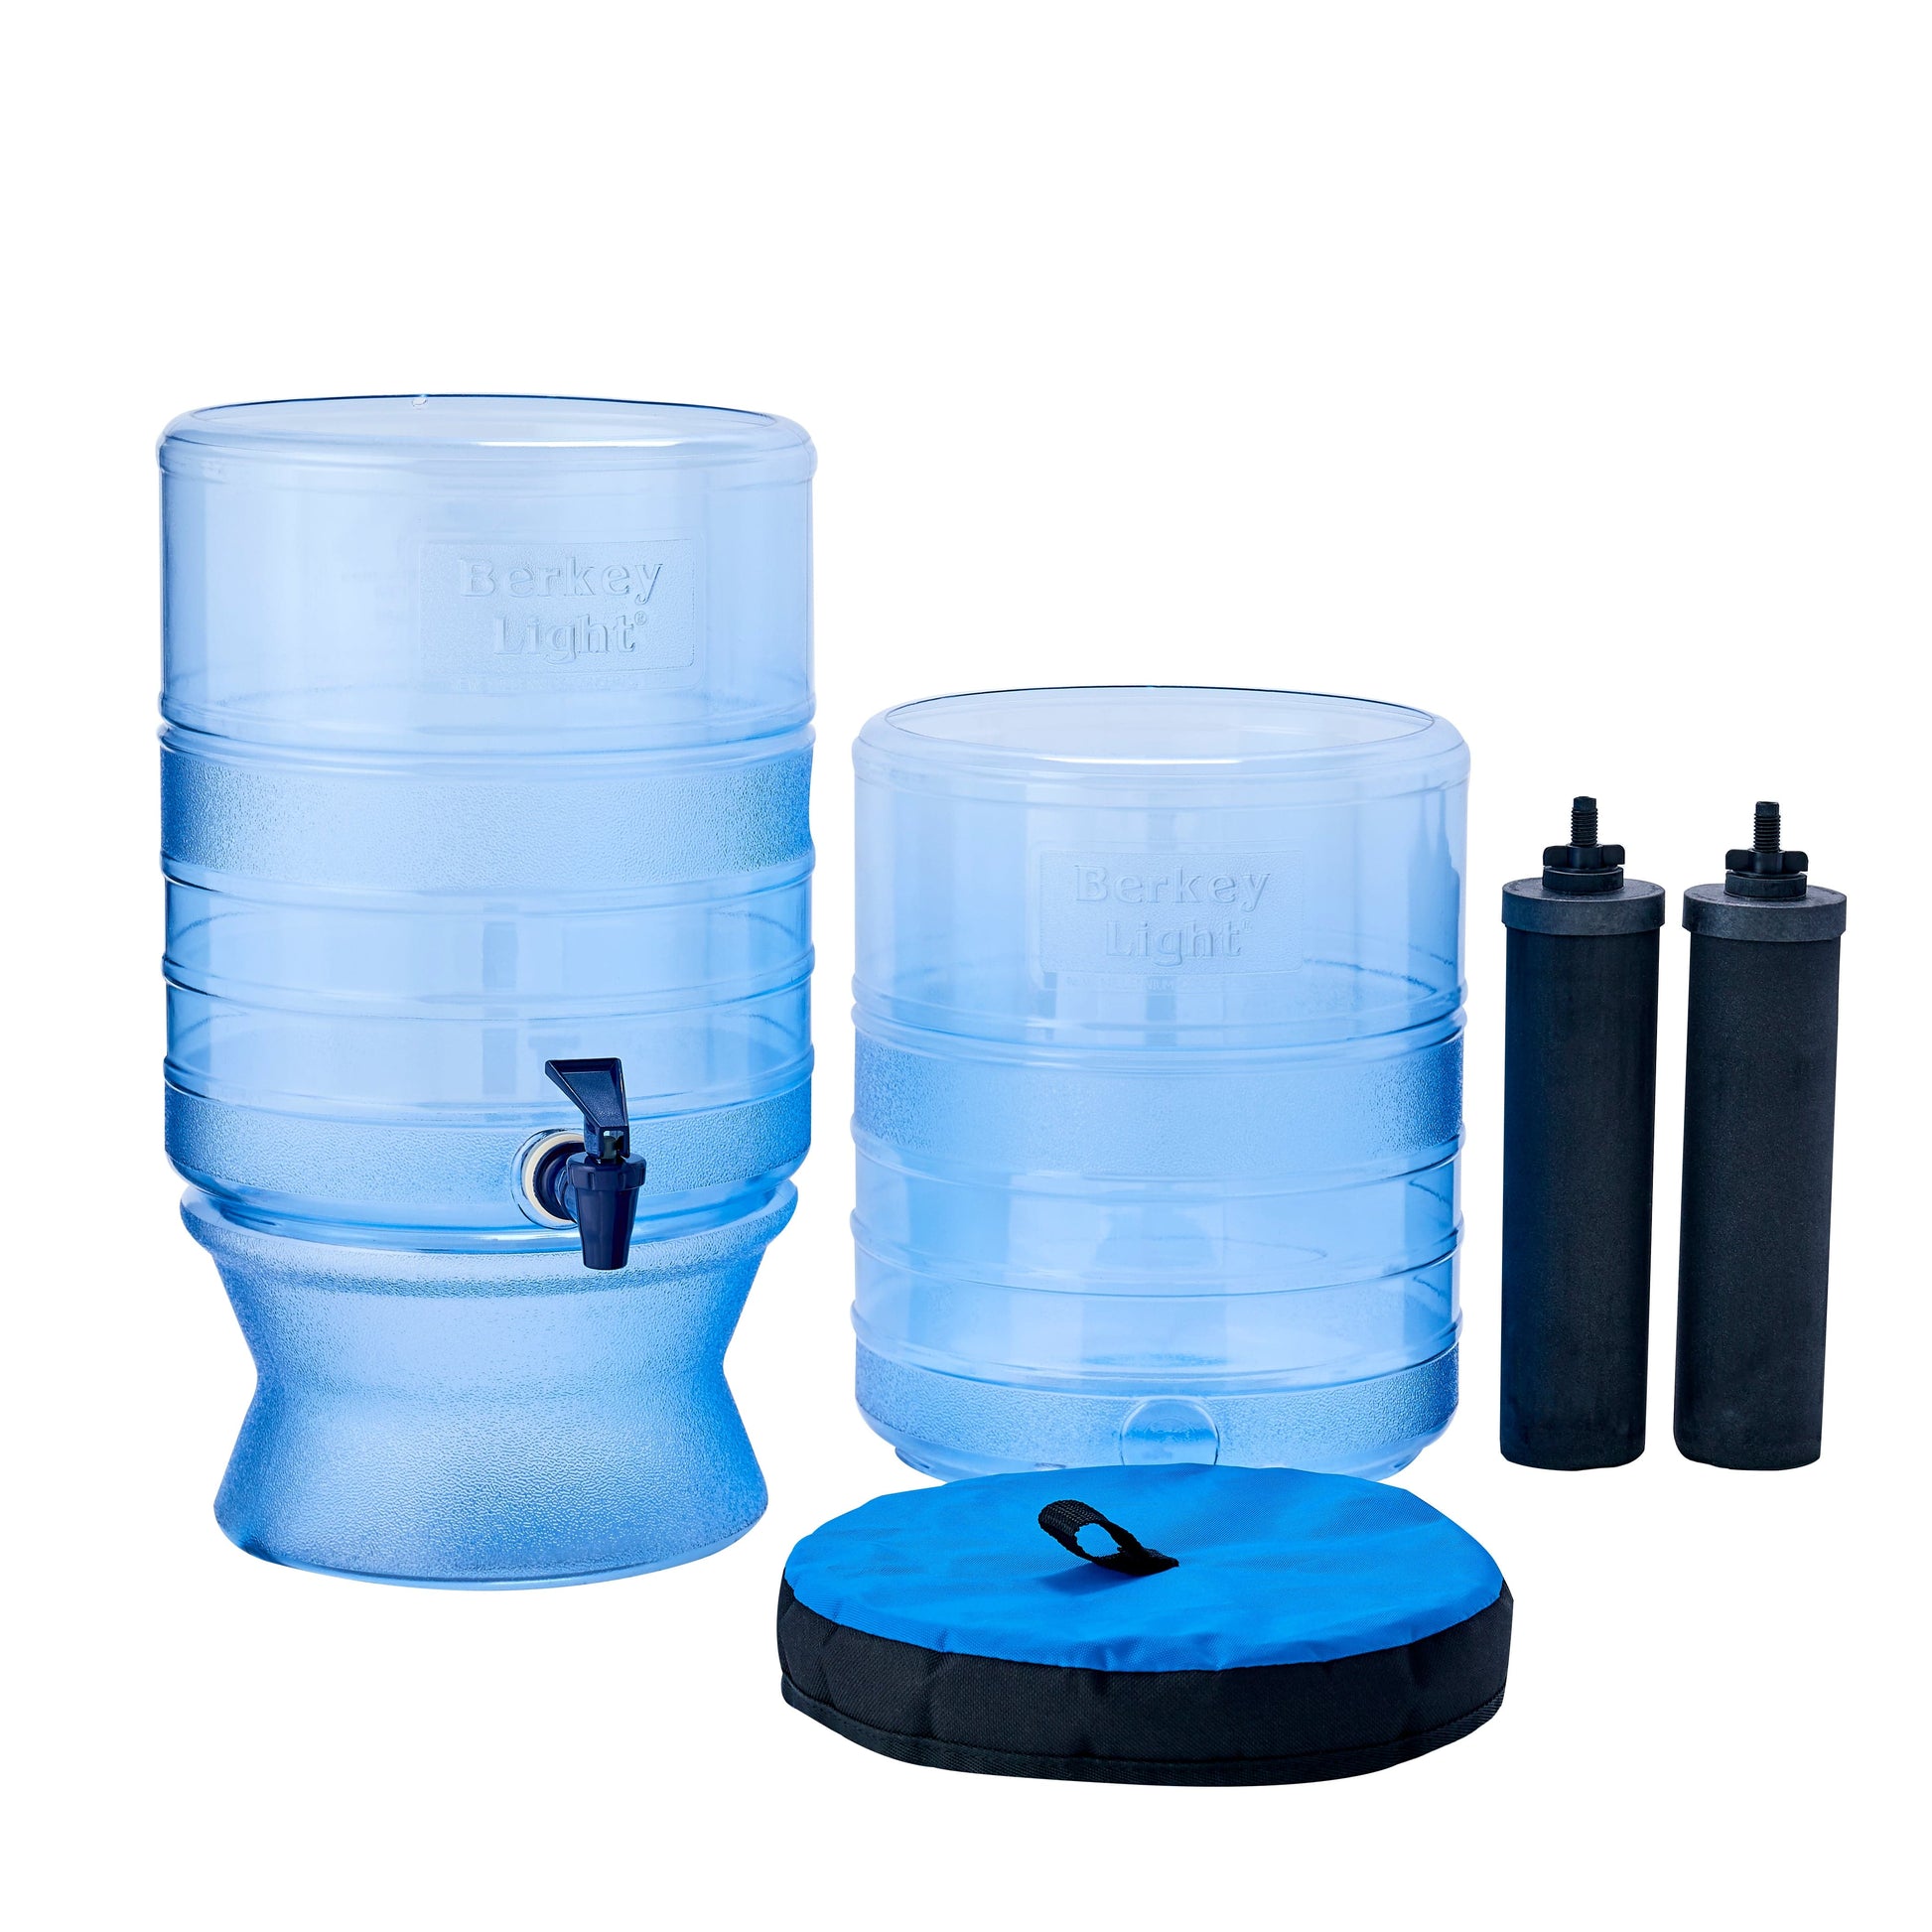 BERKEY SYSTEMS Fontaine berkey filtration BERKEY® LIGHT™ 10.4 litres - 2 filtres BLACK BERKEY® - Ref BL4X2-BB